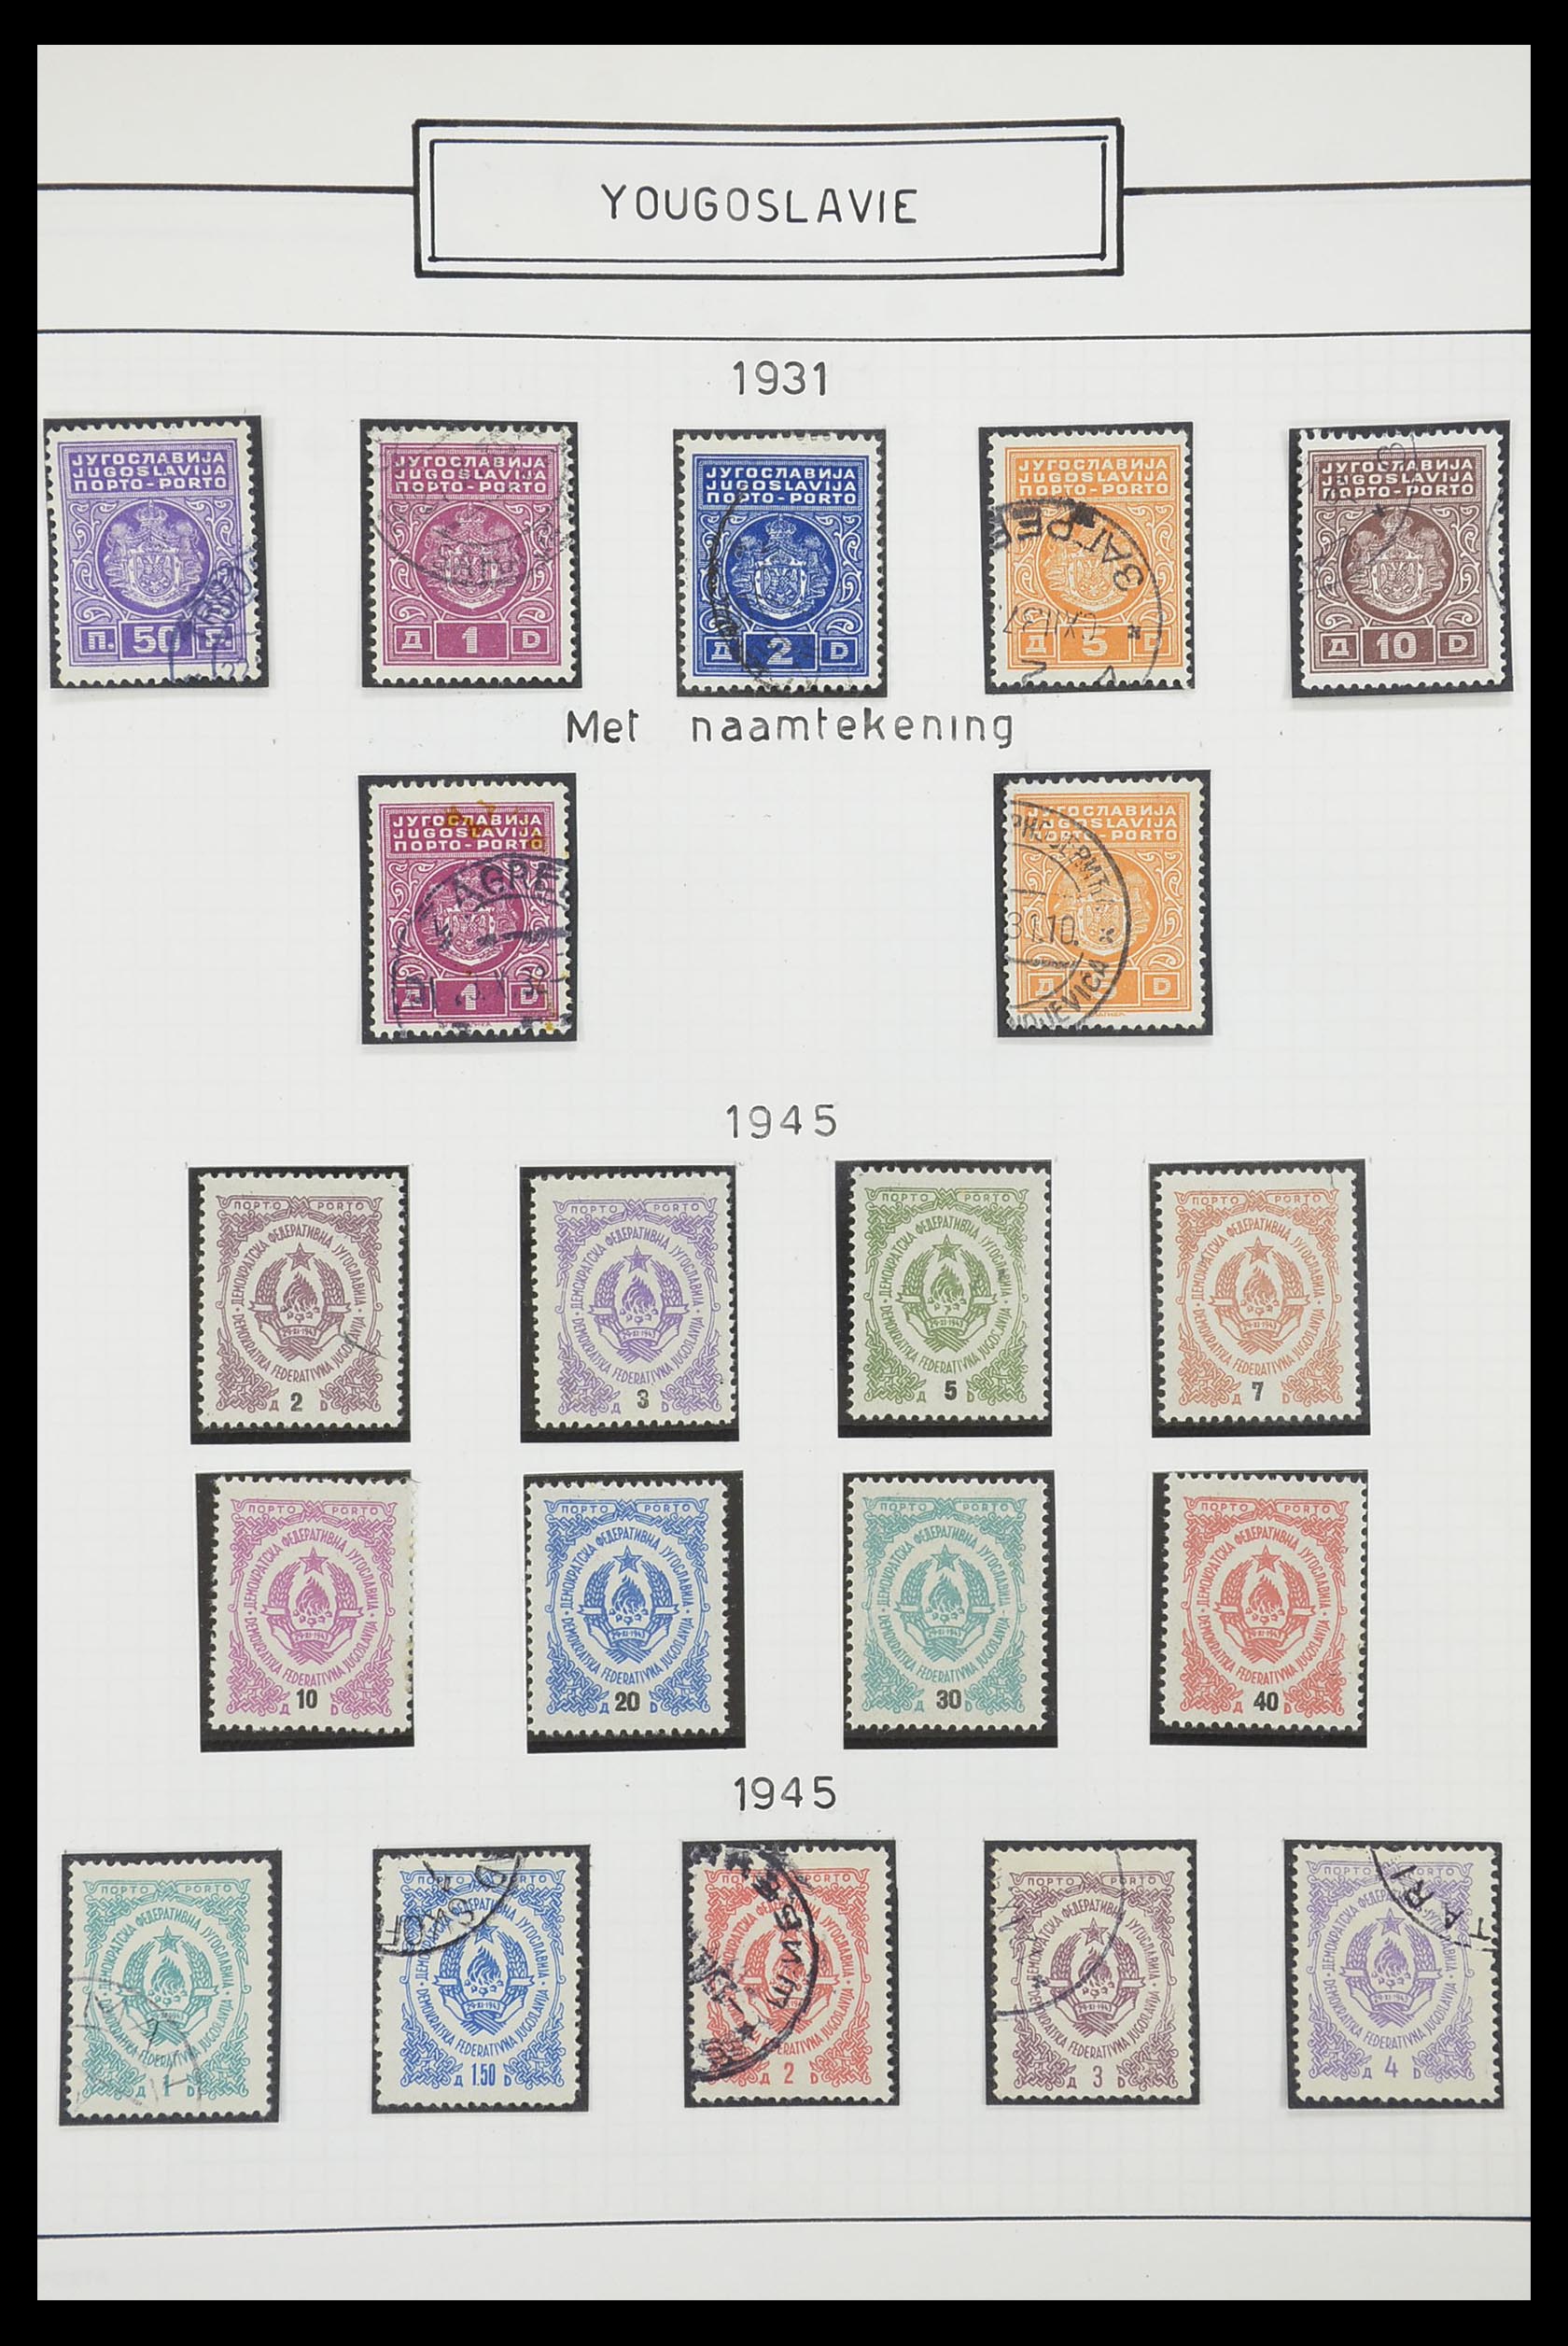 33888 068 - Stamp collection 33888 Yugoslavia 1906-1983.